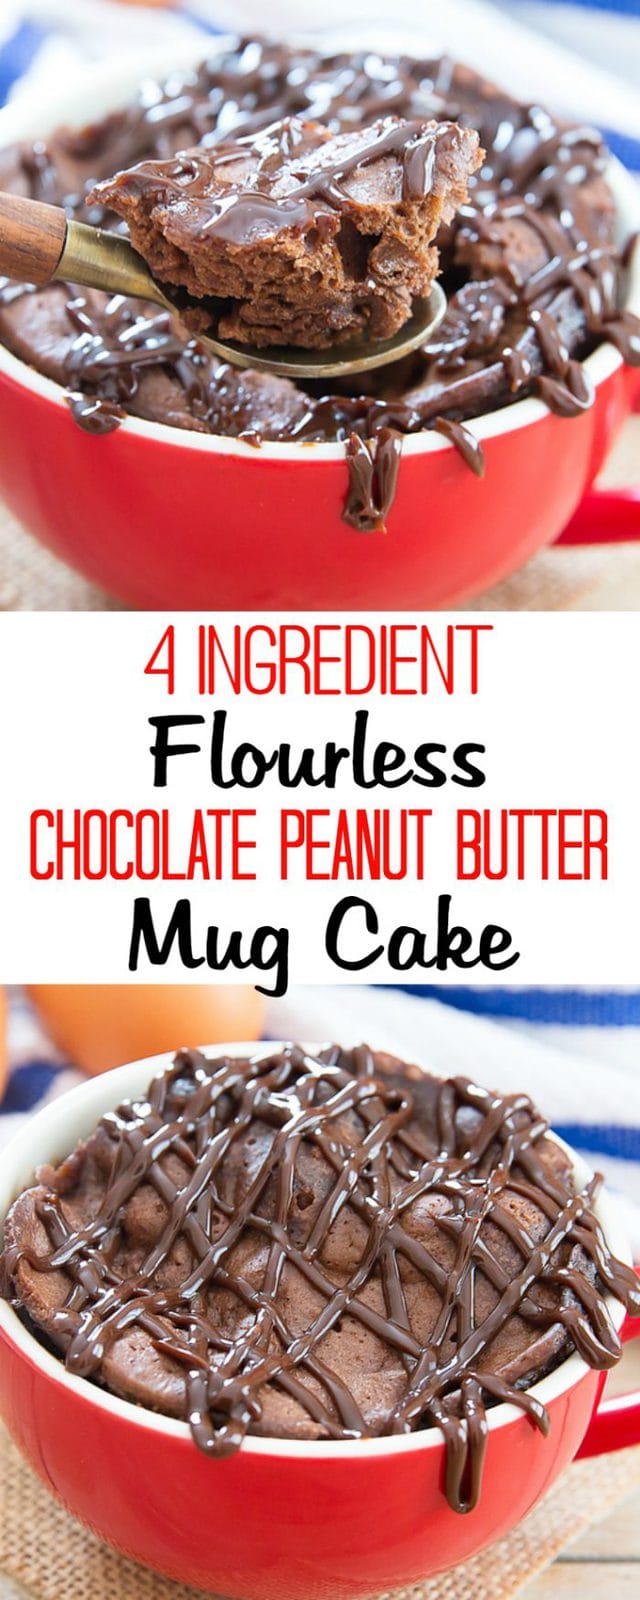 4 Ingredient Flourless Chocolate Peanut Butter Mug Cake